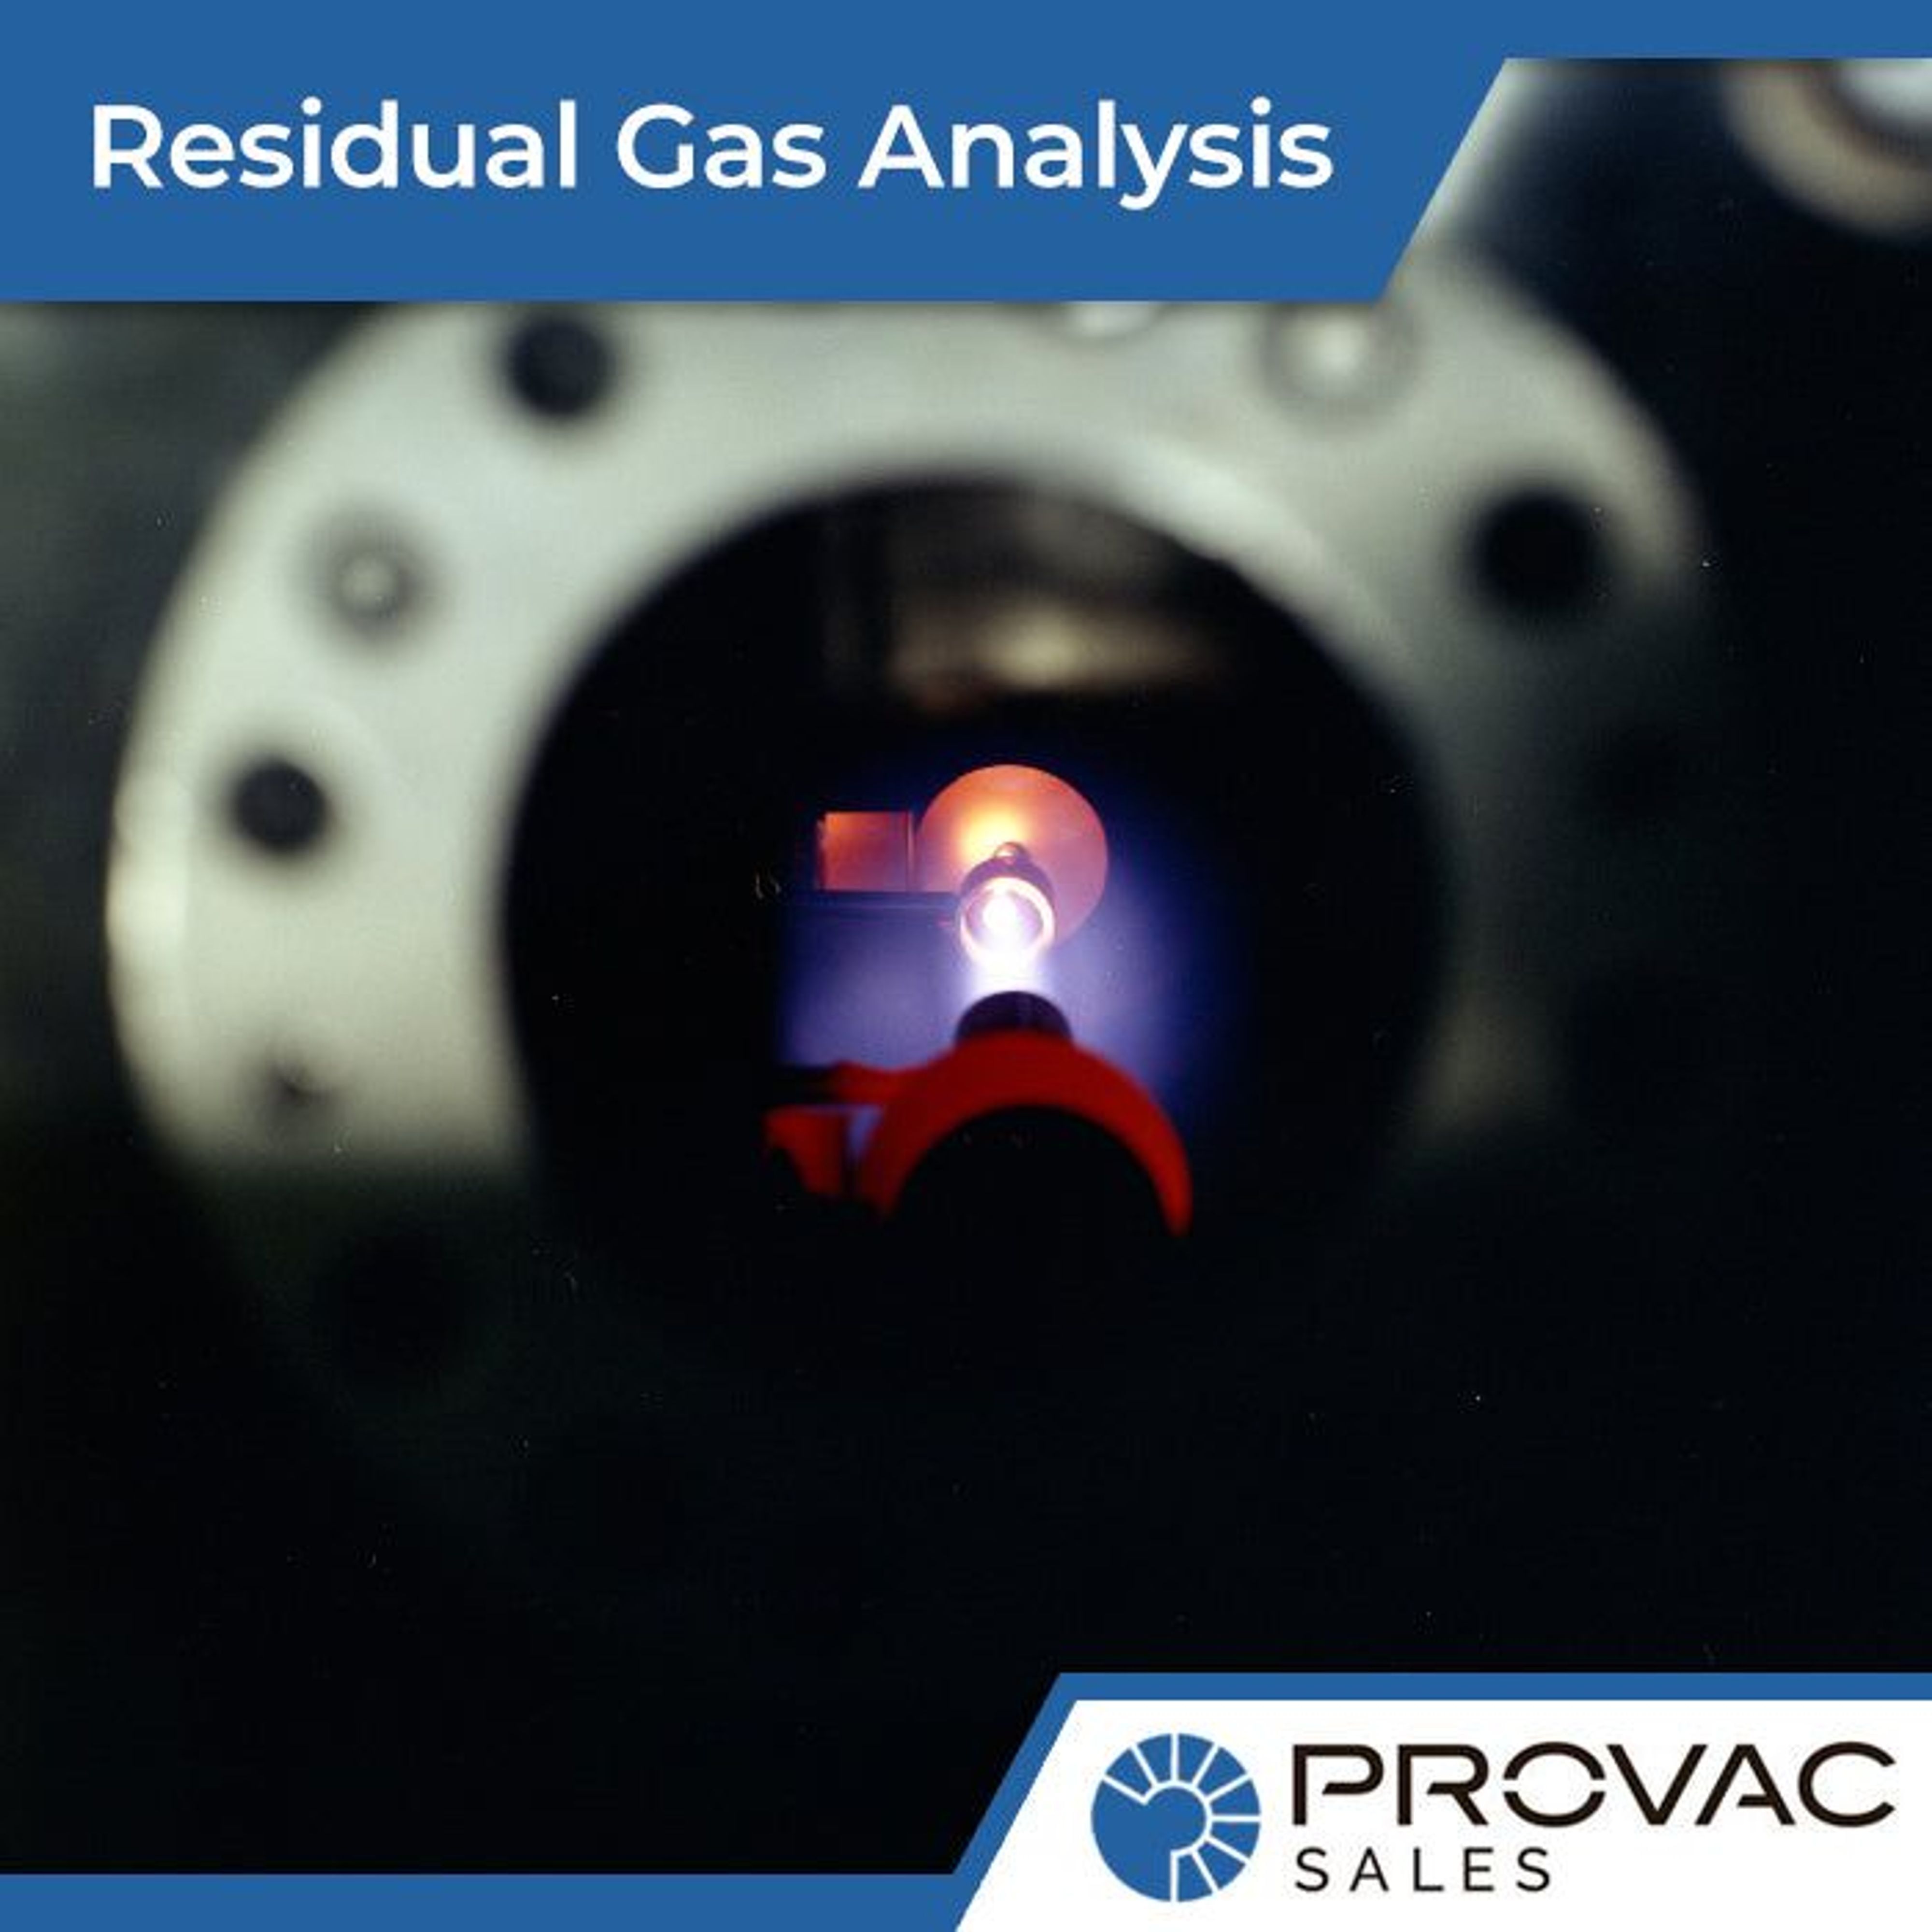 Analysis of Residual Gas Background